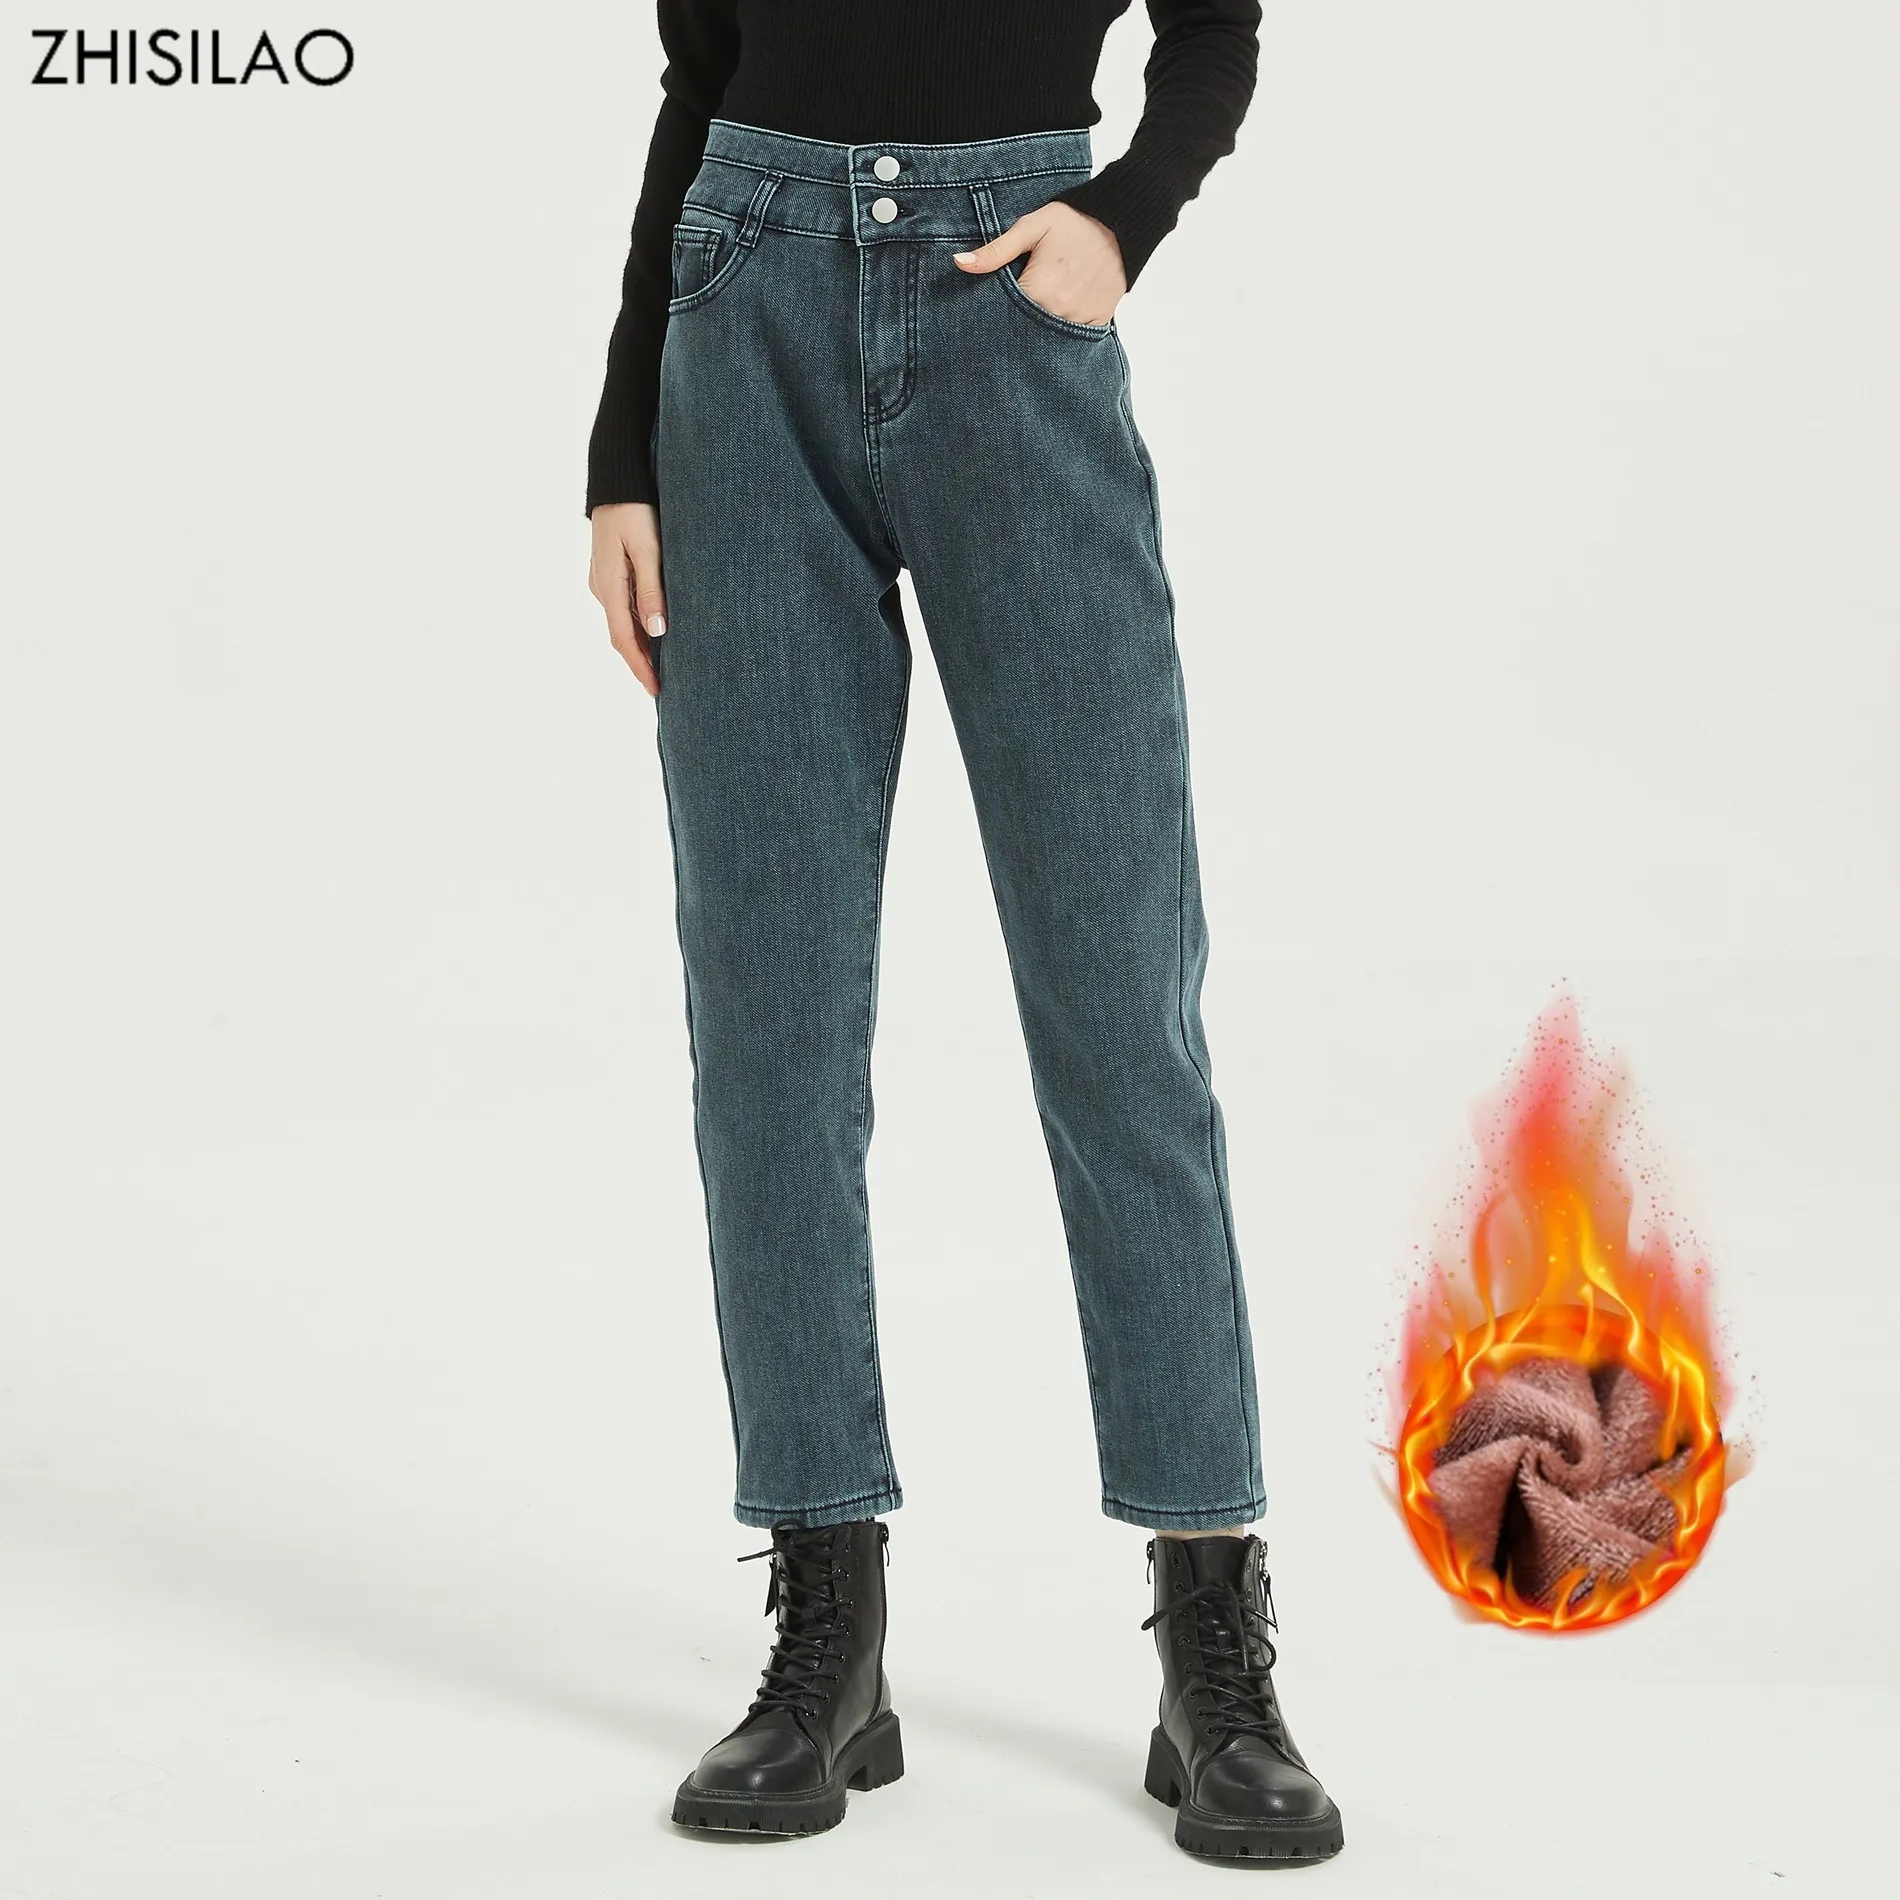 

ZHISILAO Winter Warm Thick Velvet Jeans 2021 Women High Waist Straight Jeans Fleece Slim Stretch Ladies Casual Denim Pants